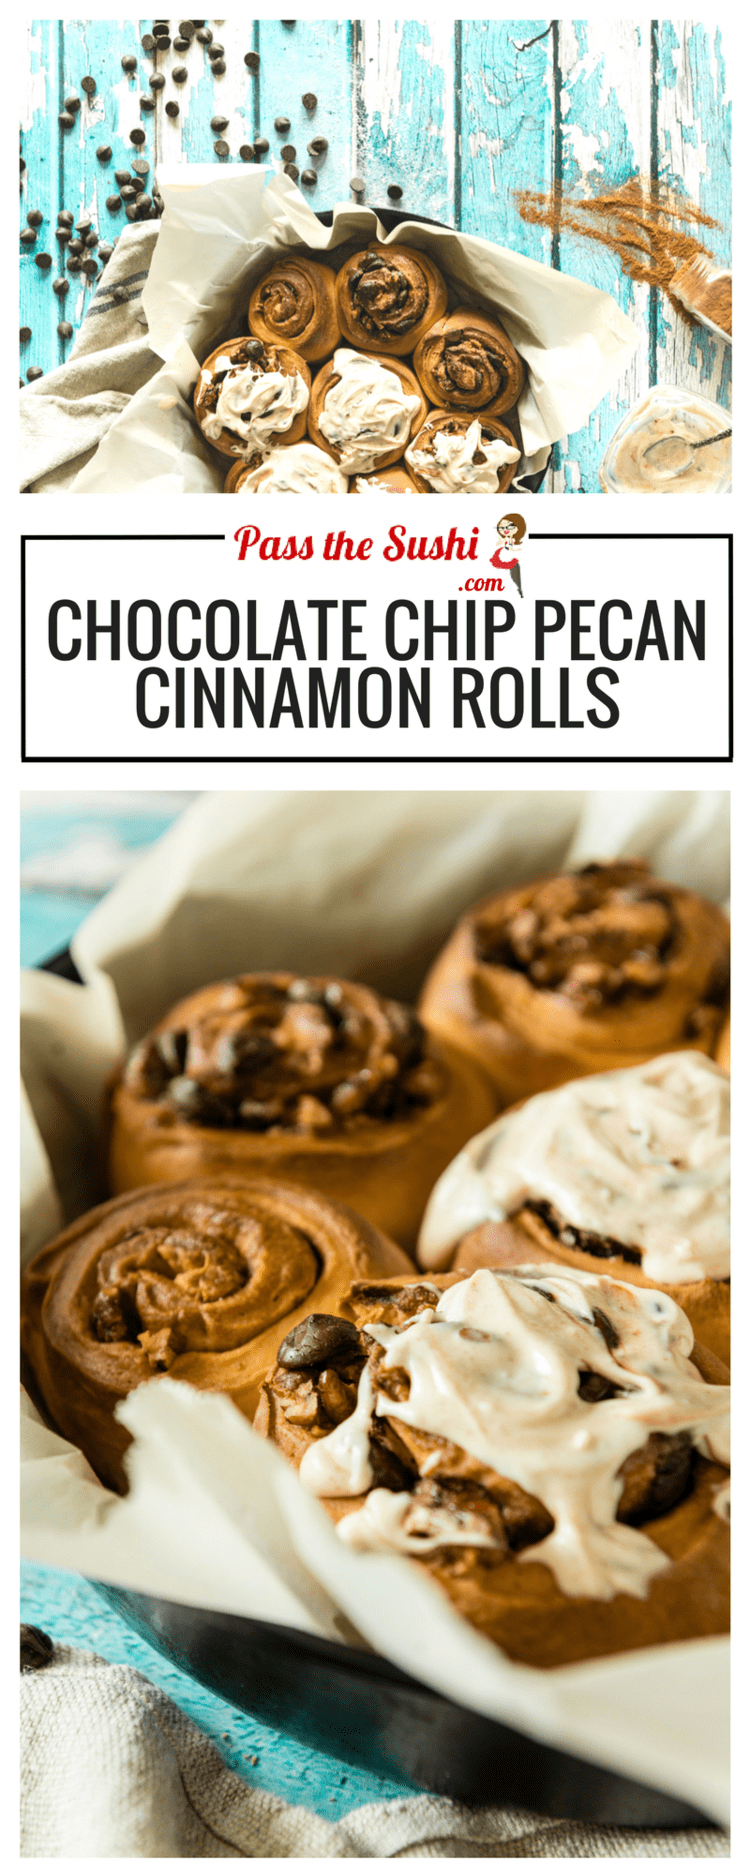 Chocolate Chip Pecan Cinnamon Rolls Recipe